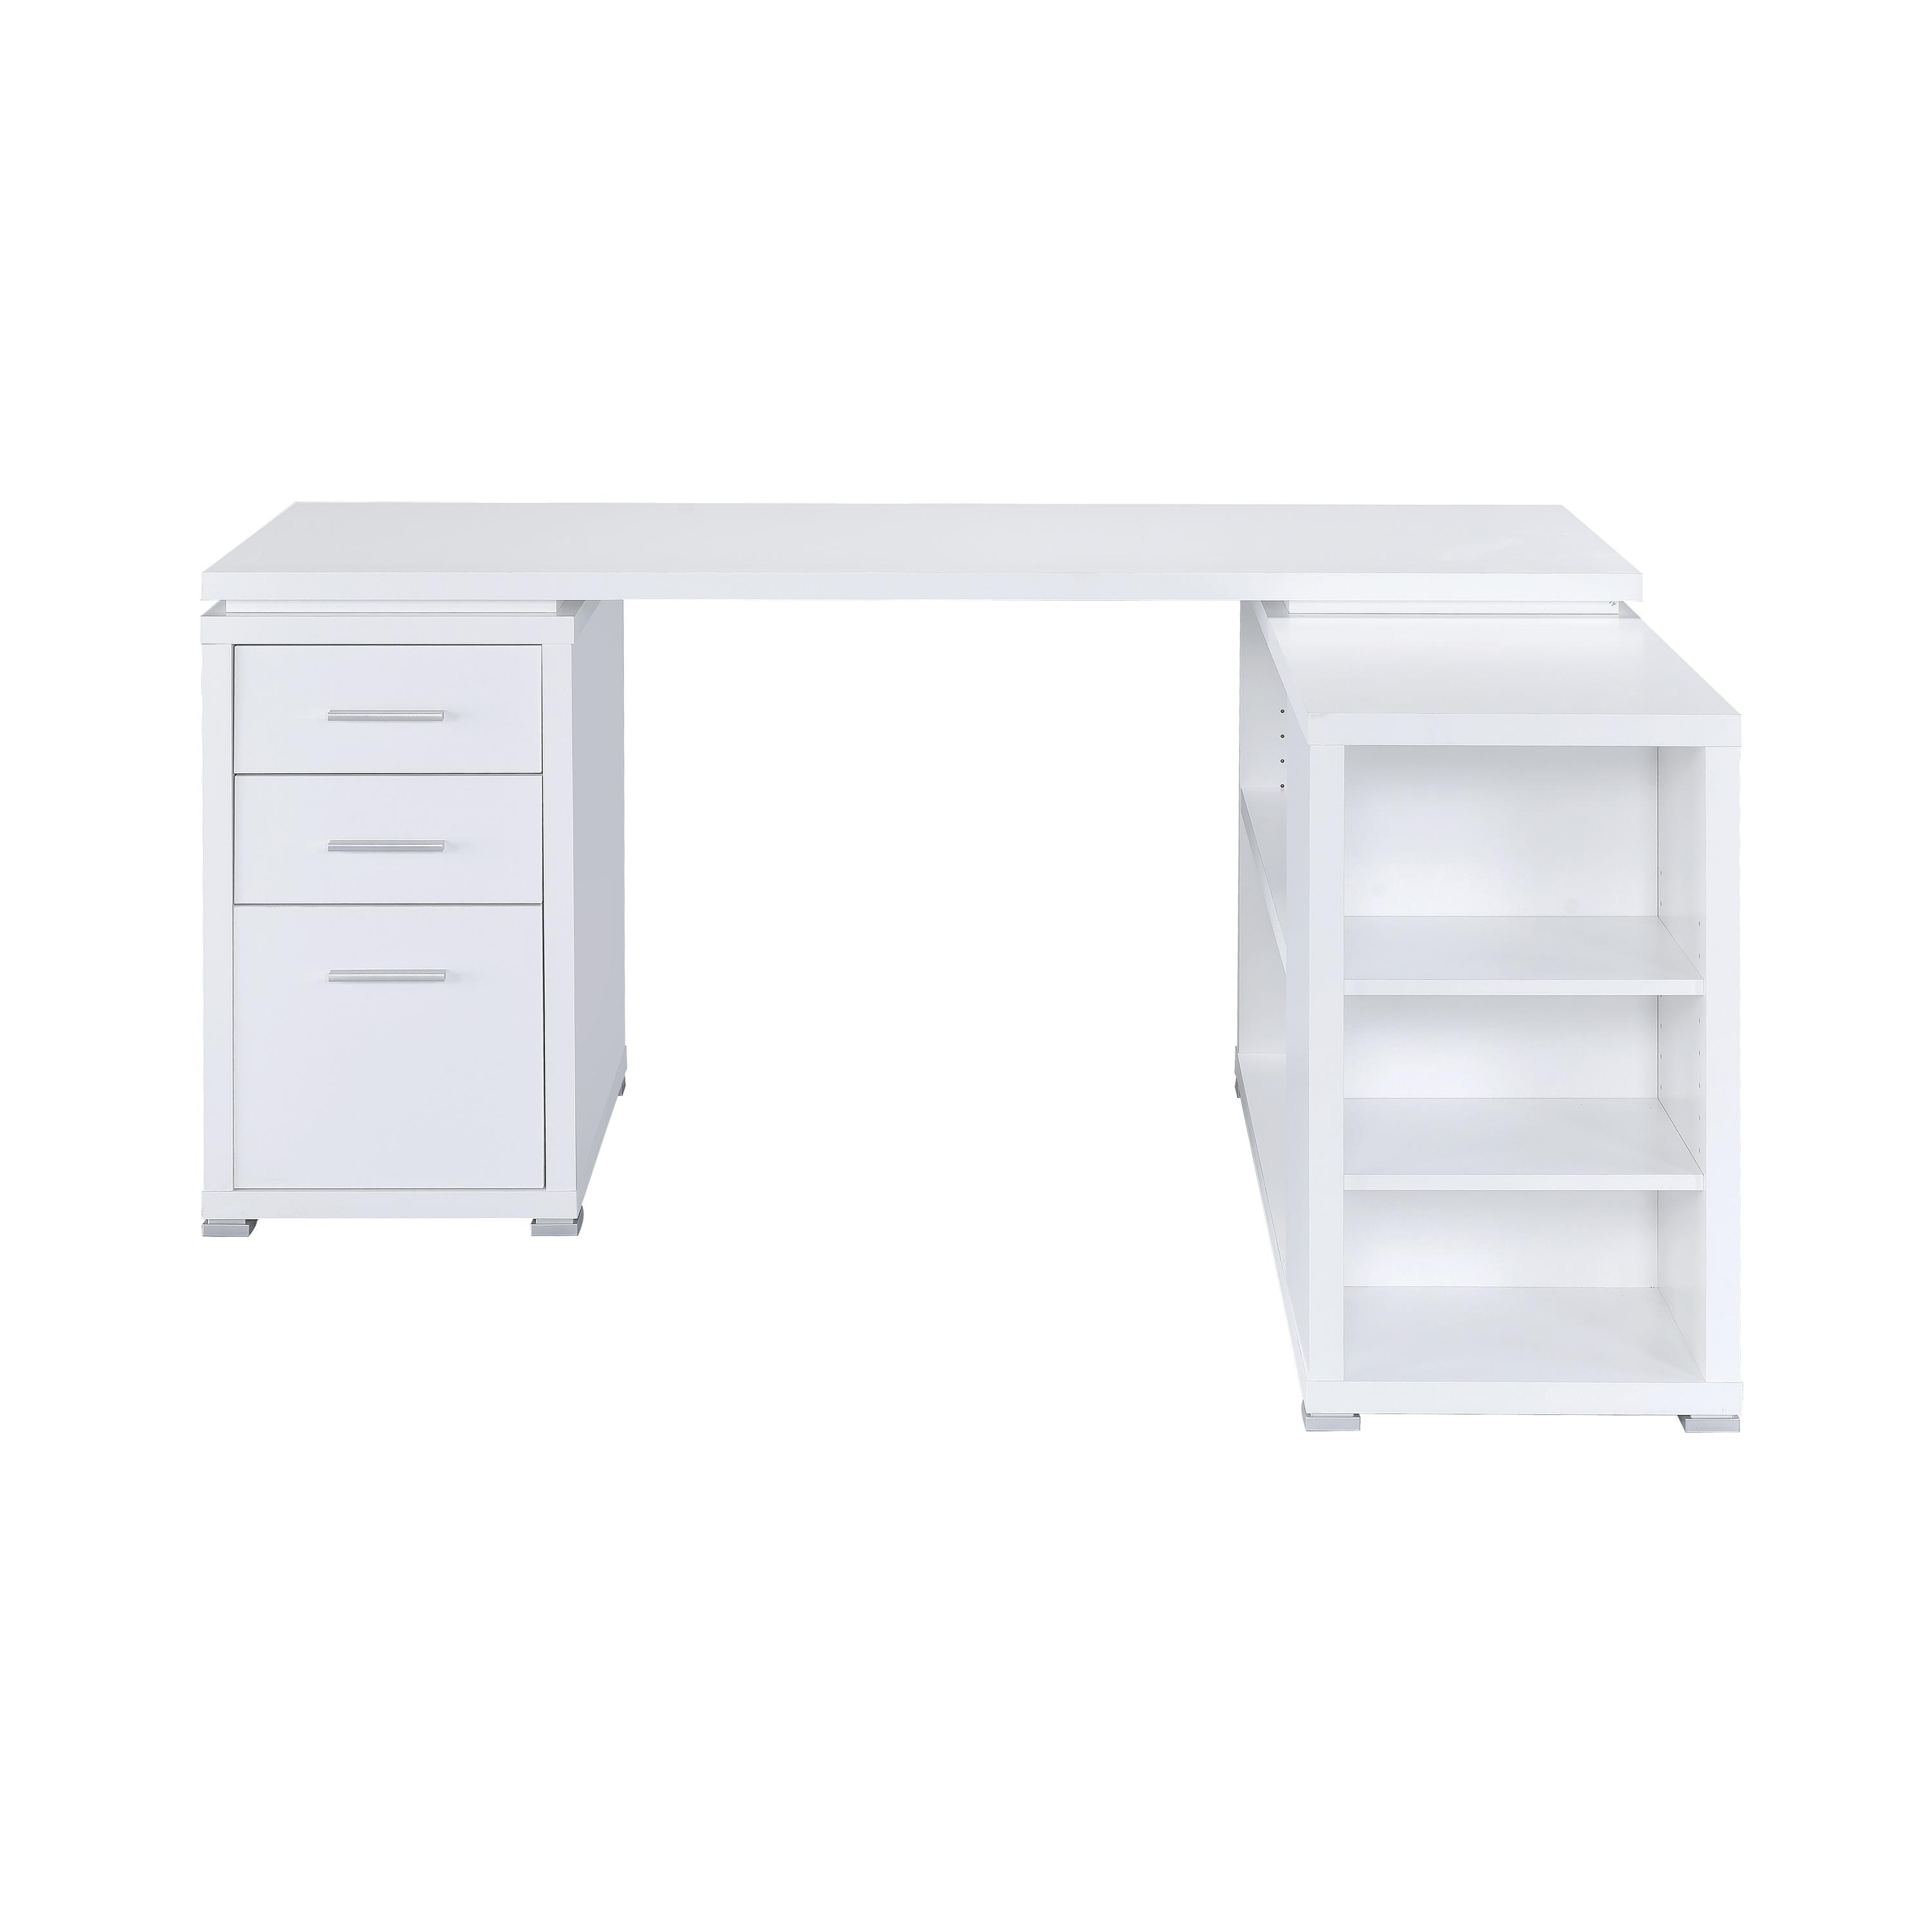 https://nyfurnitureoutlets.com/products/modern-white-solid-wood-office-desk-coaster-800516-yvette/1x1/495862-3-170024001501.jpg